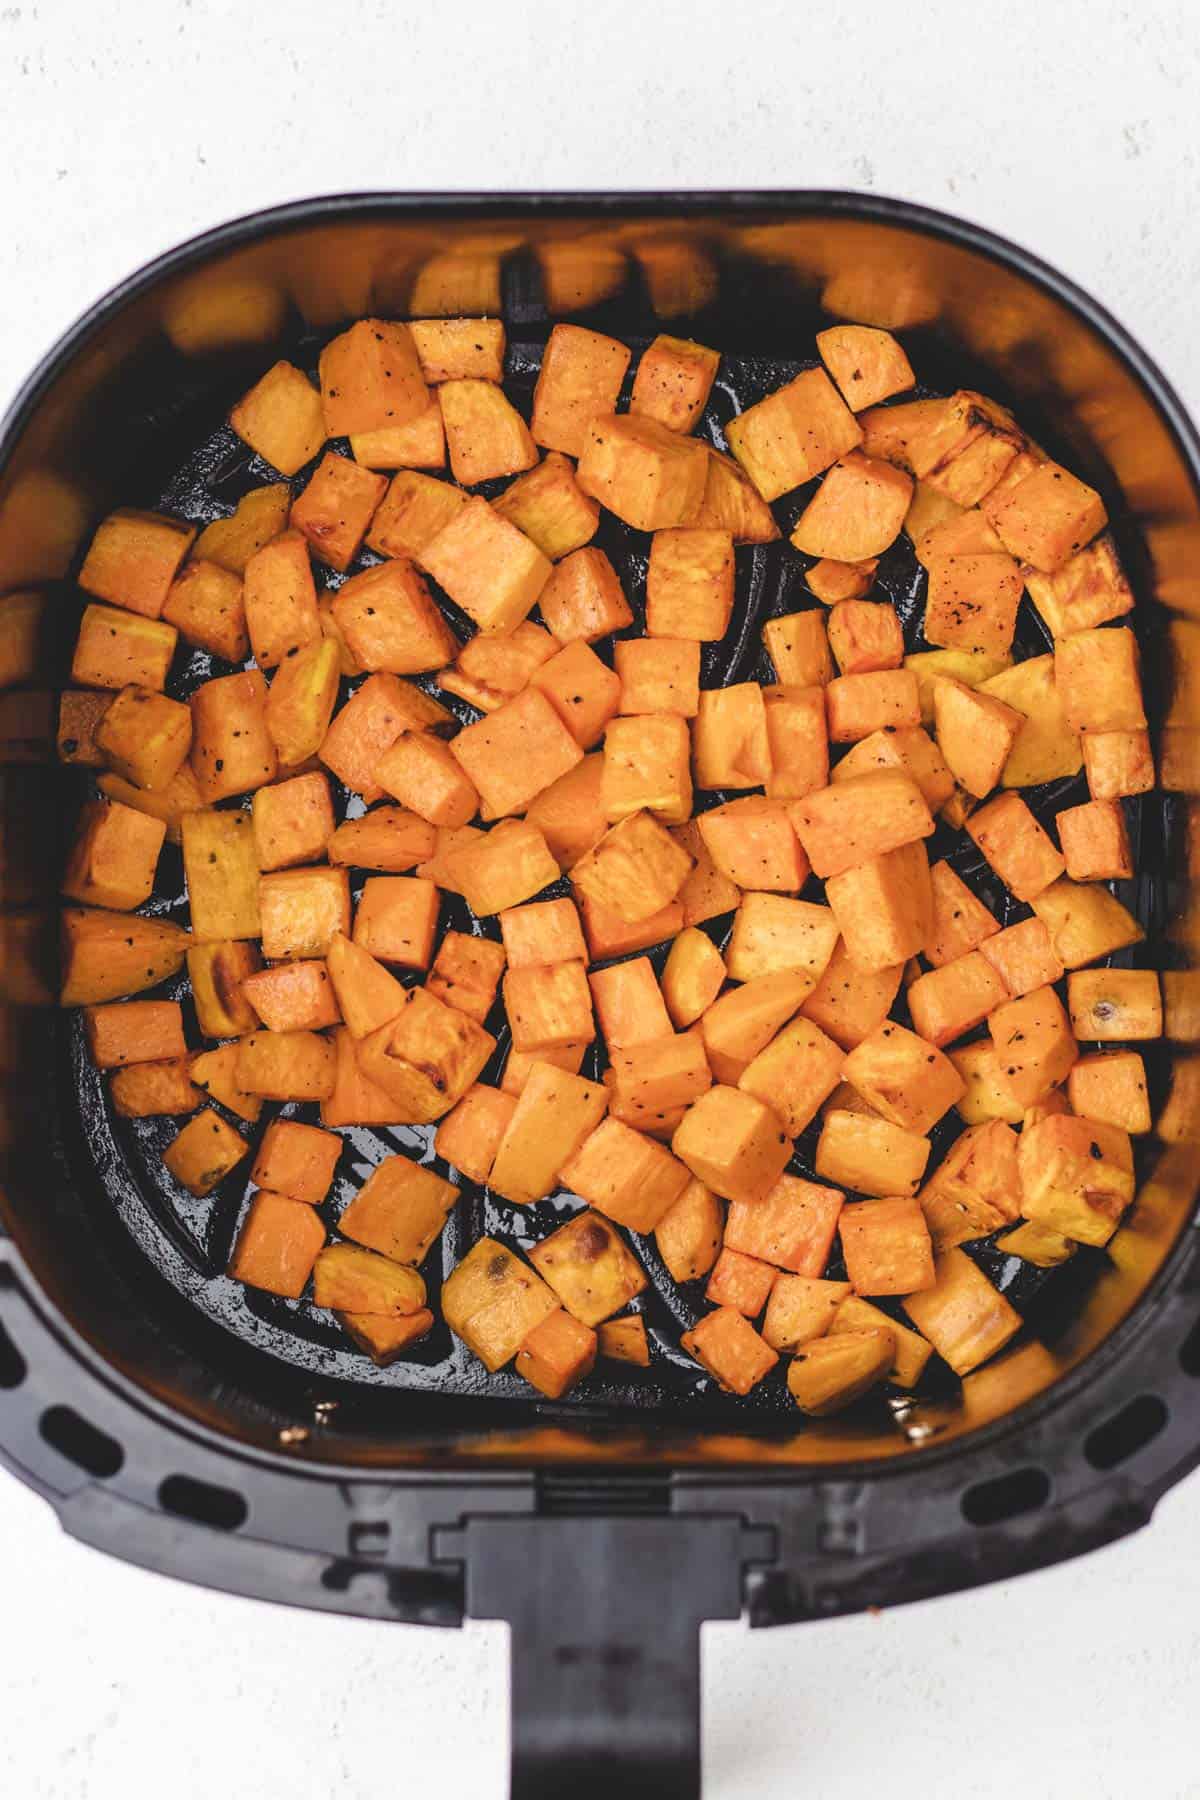 Diced sweet potatoes in an air fryer basket